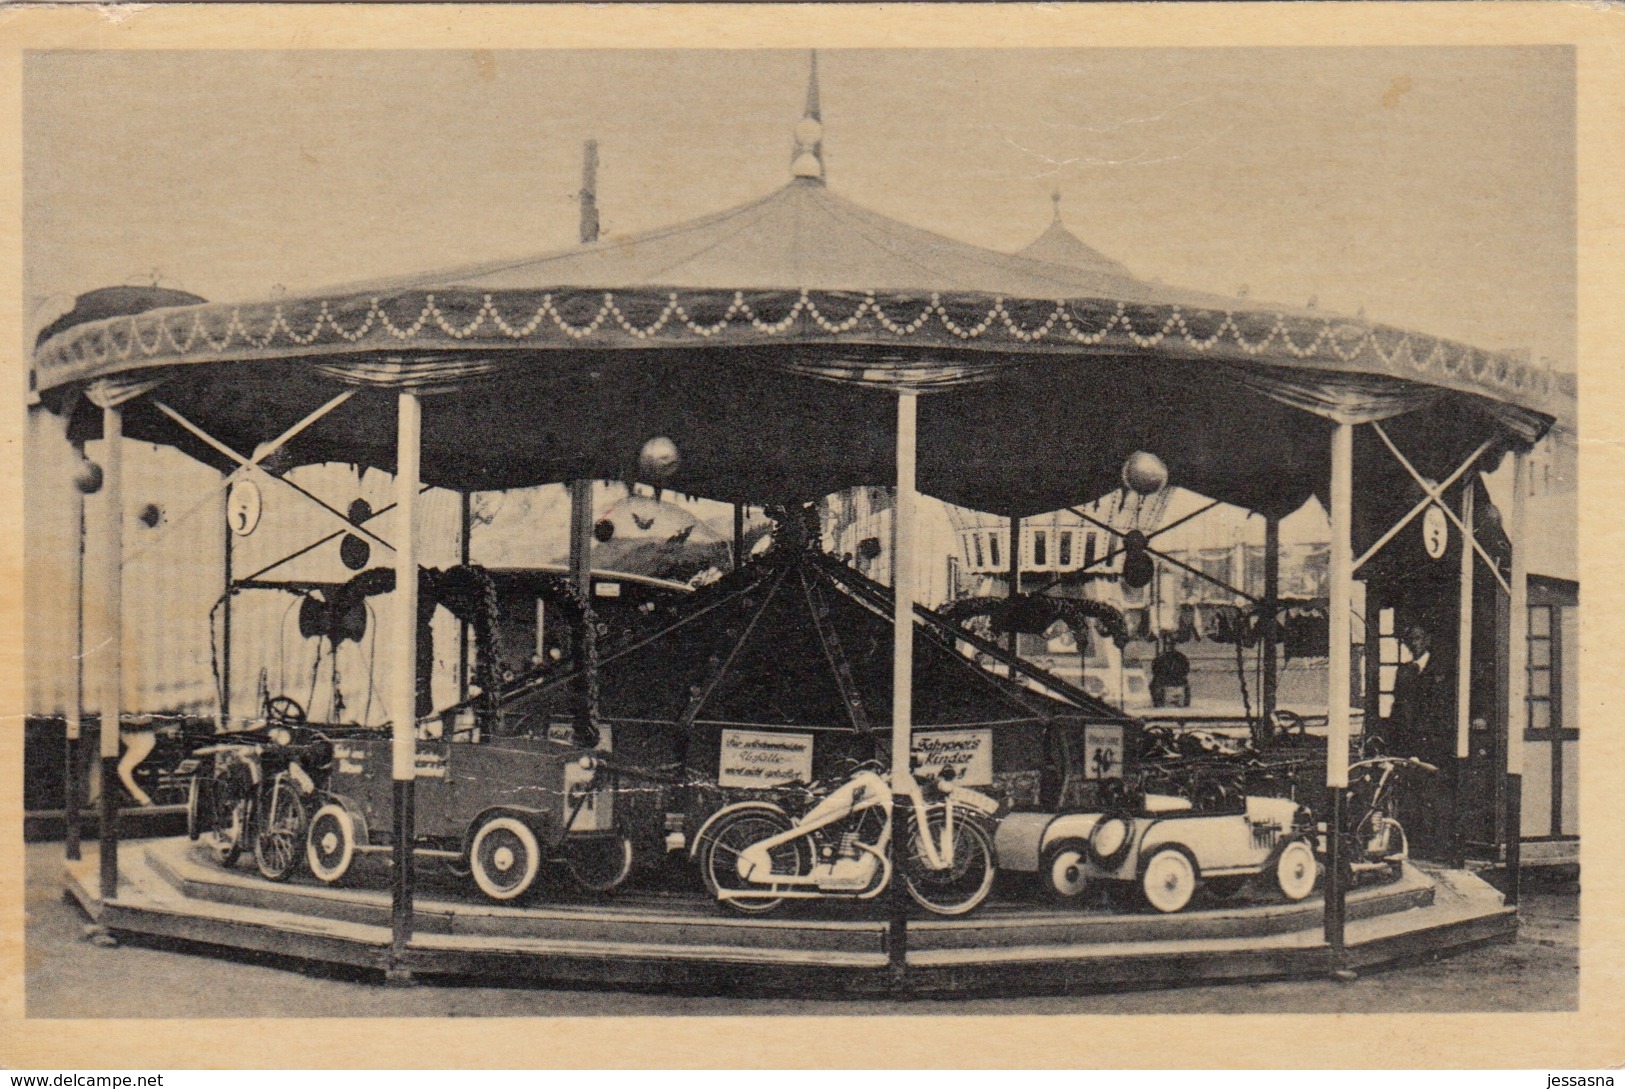 AK - Altes Ringelspiel (Karussell) - 30iger Jahre - Zirkus